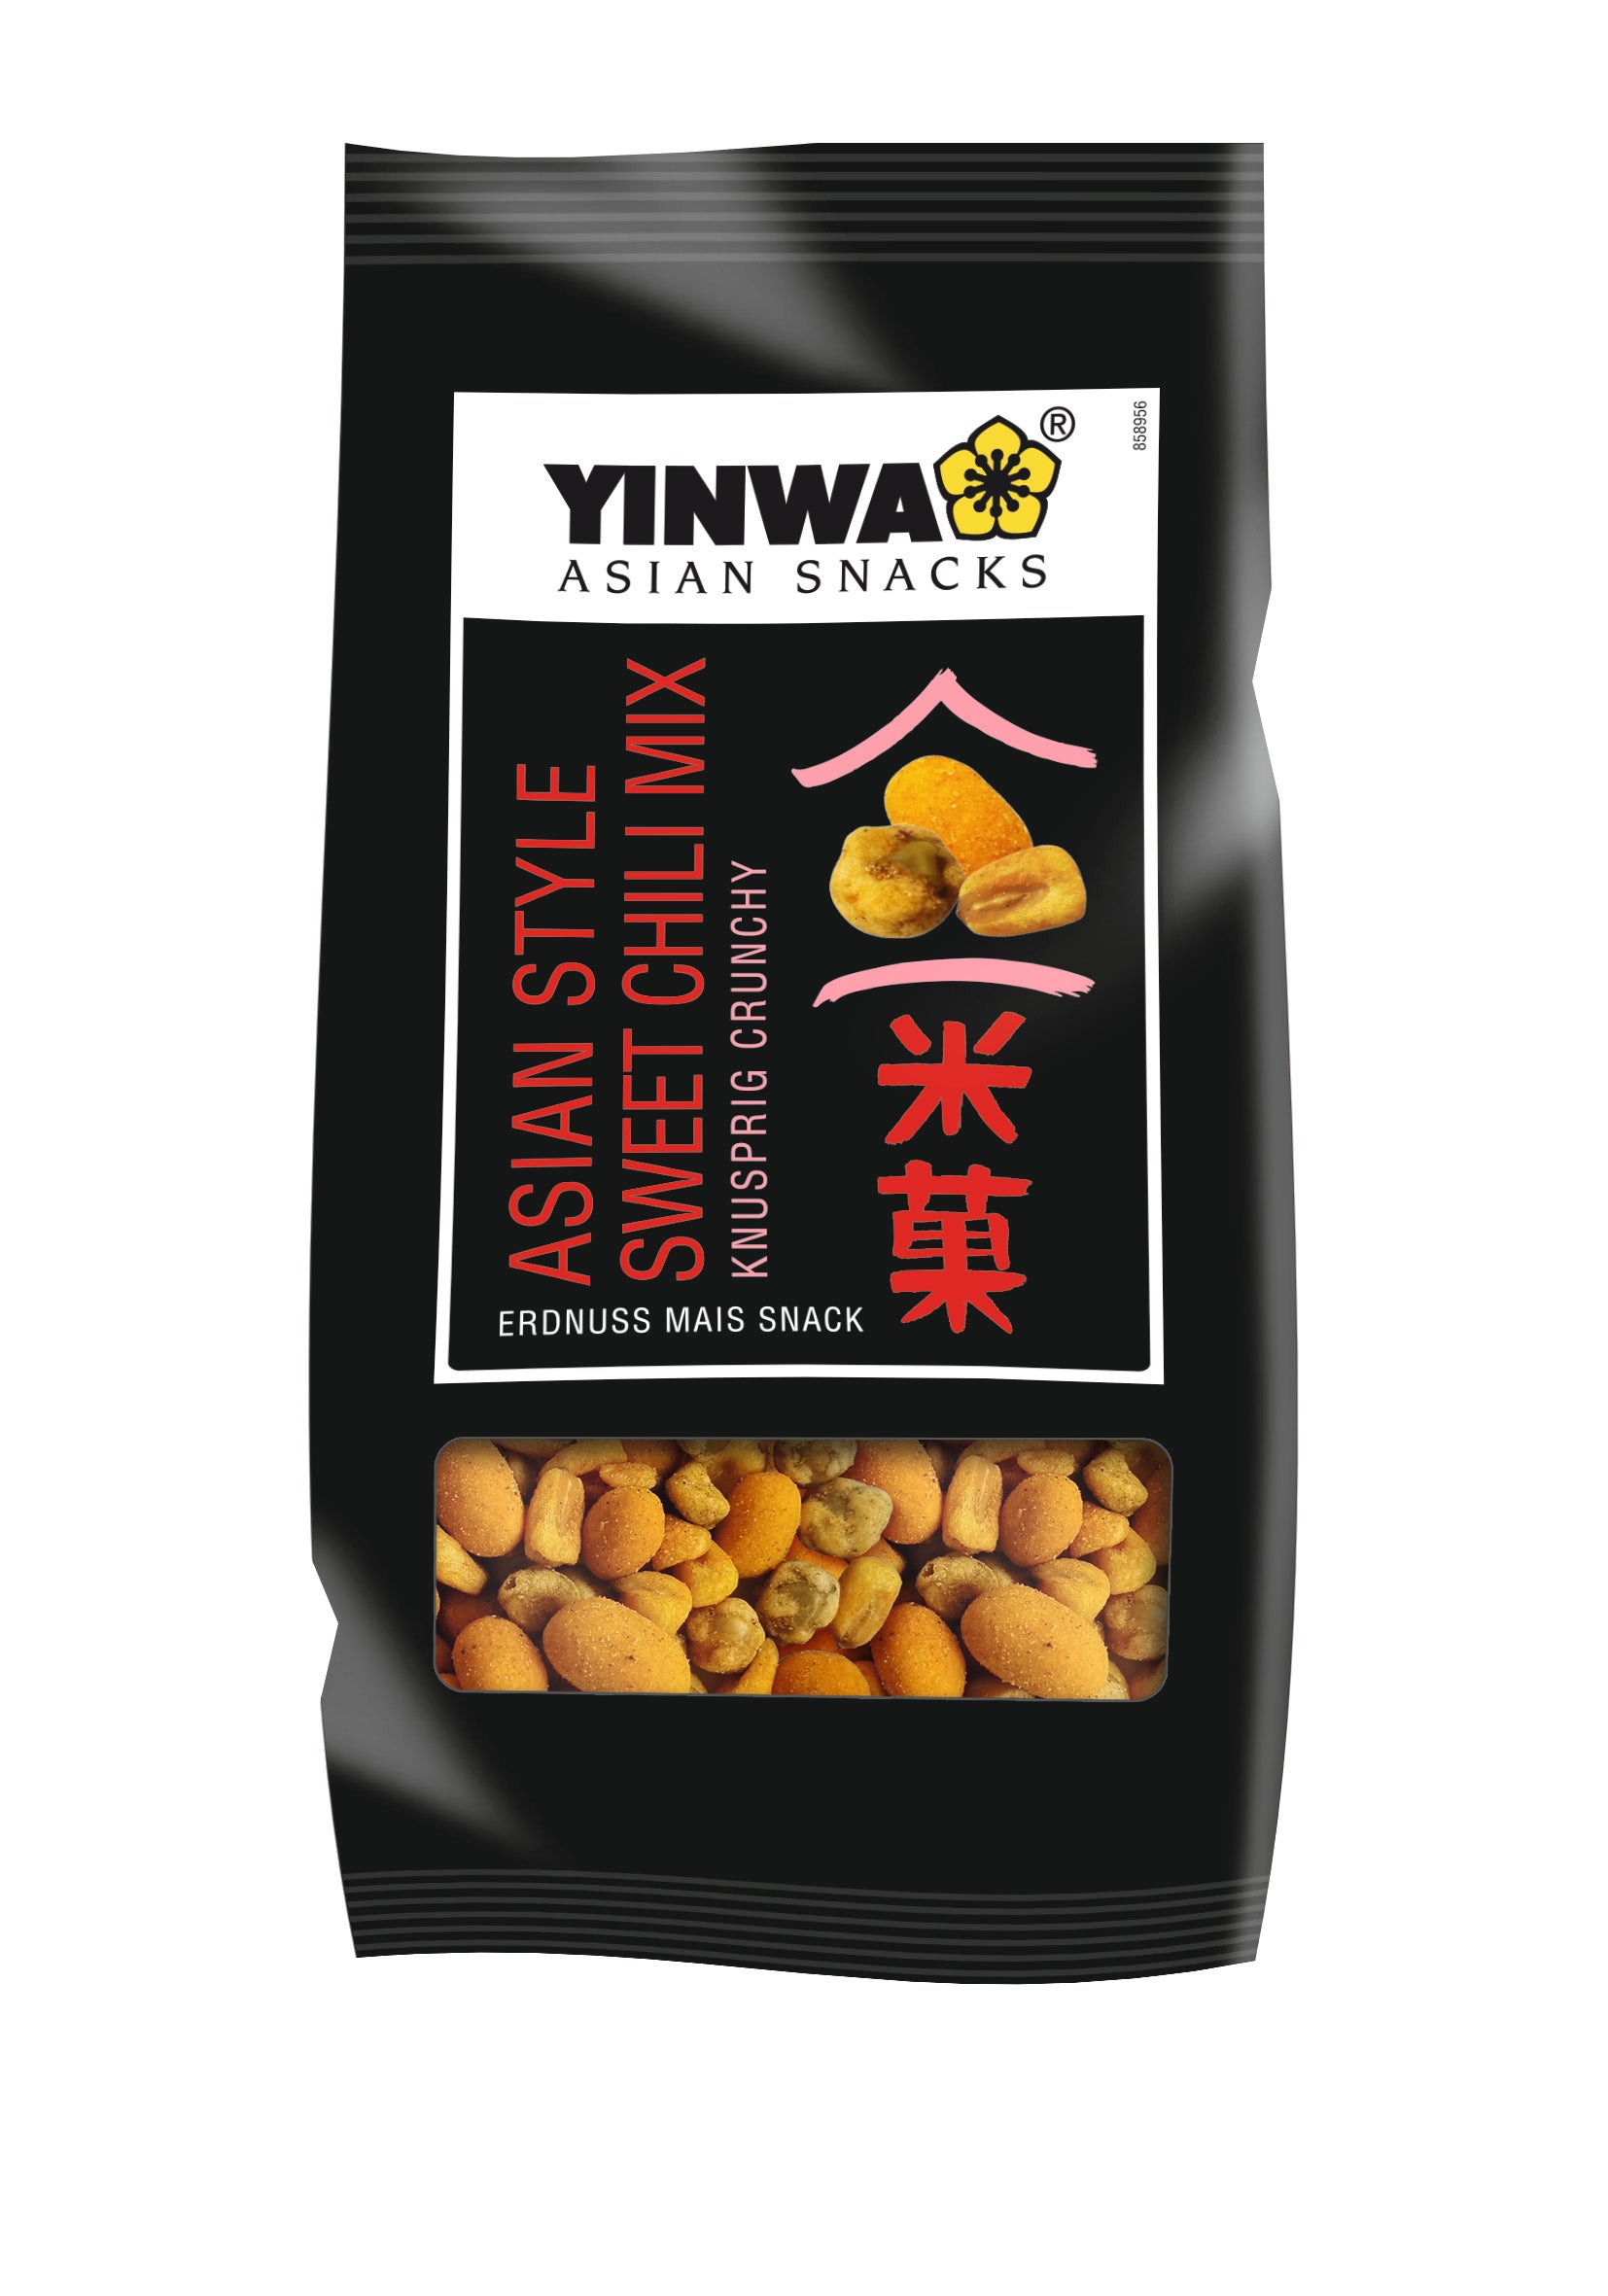 Yinwa Asian Snacks - Reisgebäck - Wasabi-Snacks und mehr